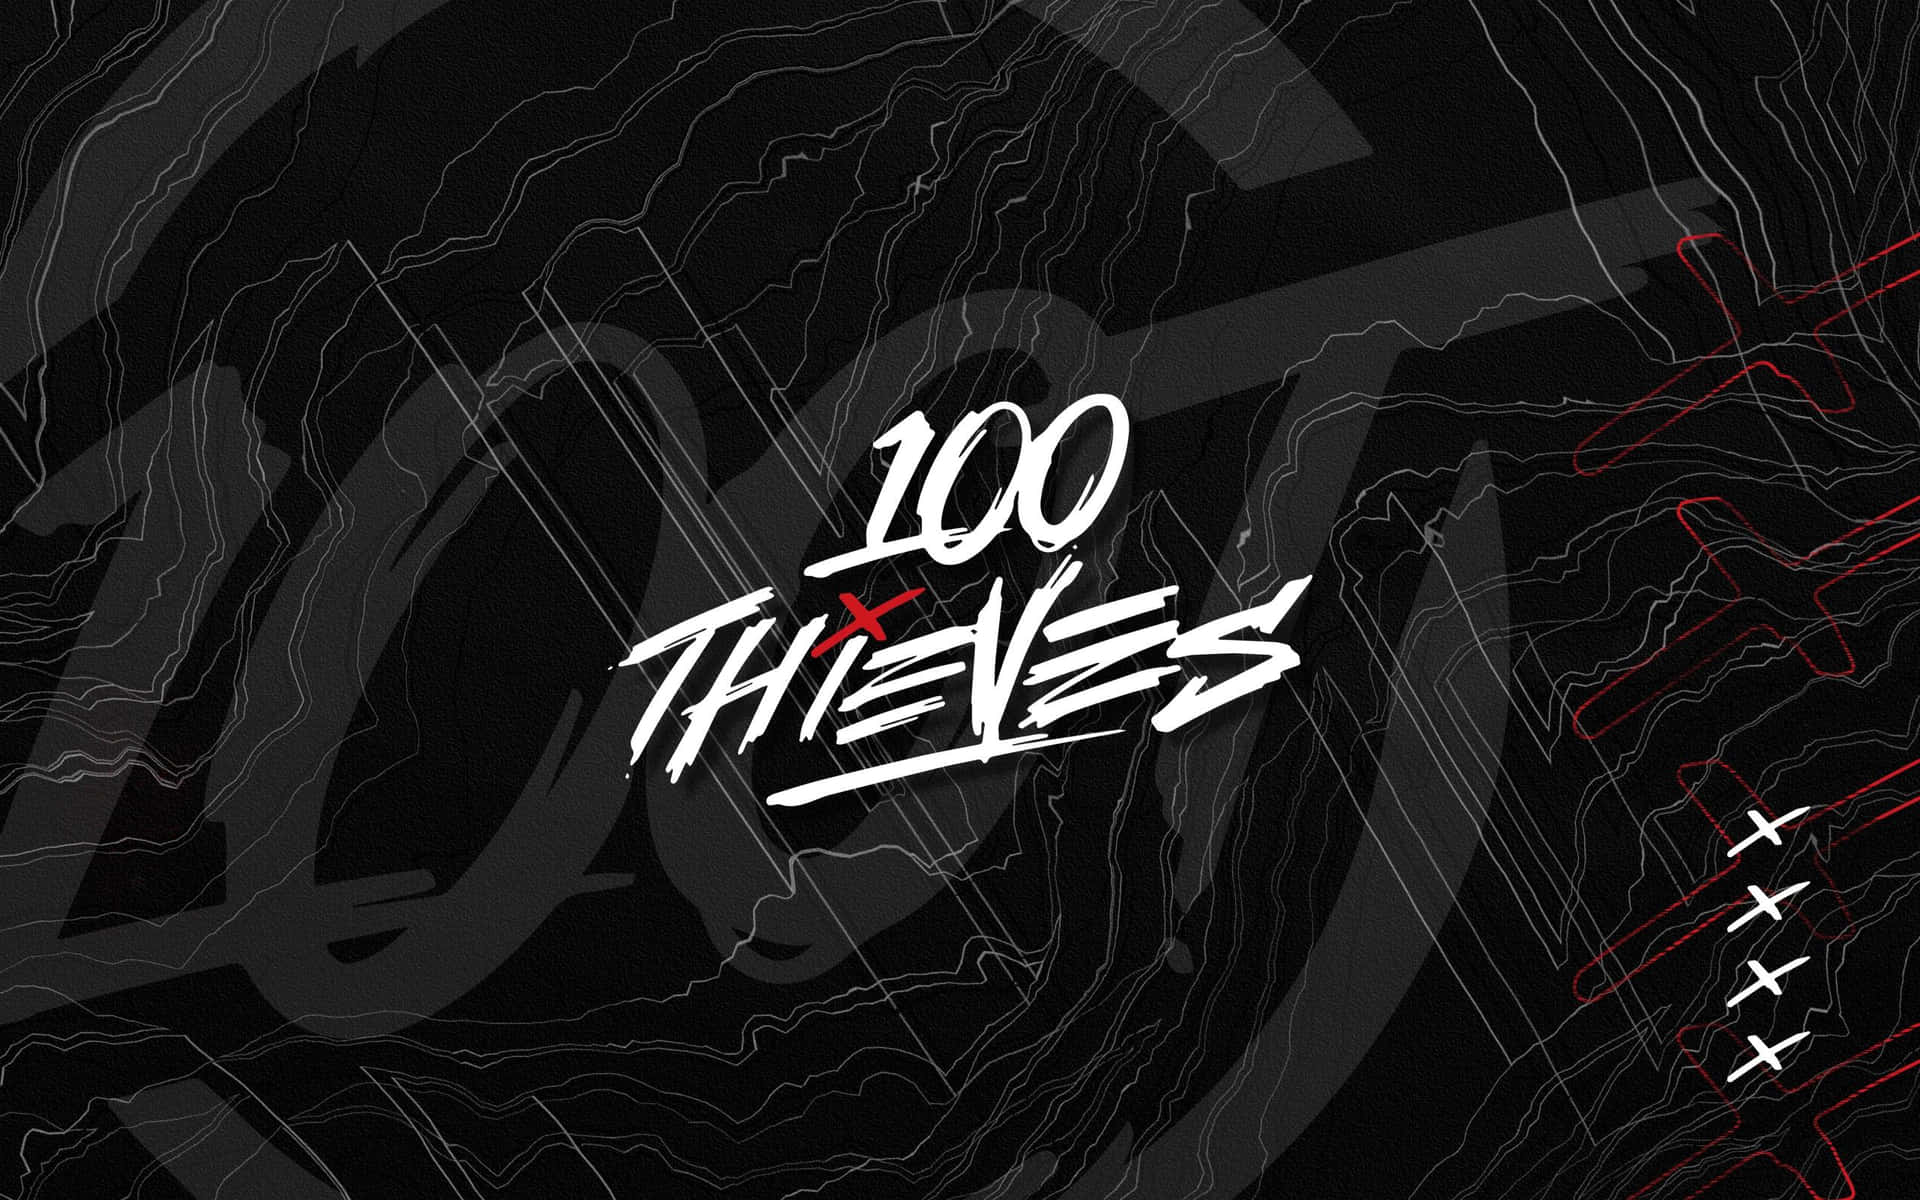 Representing 100 Thieves: H1ghr Music Wallpaper